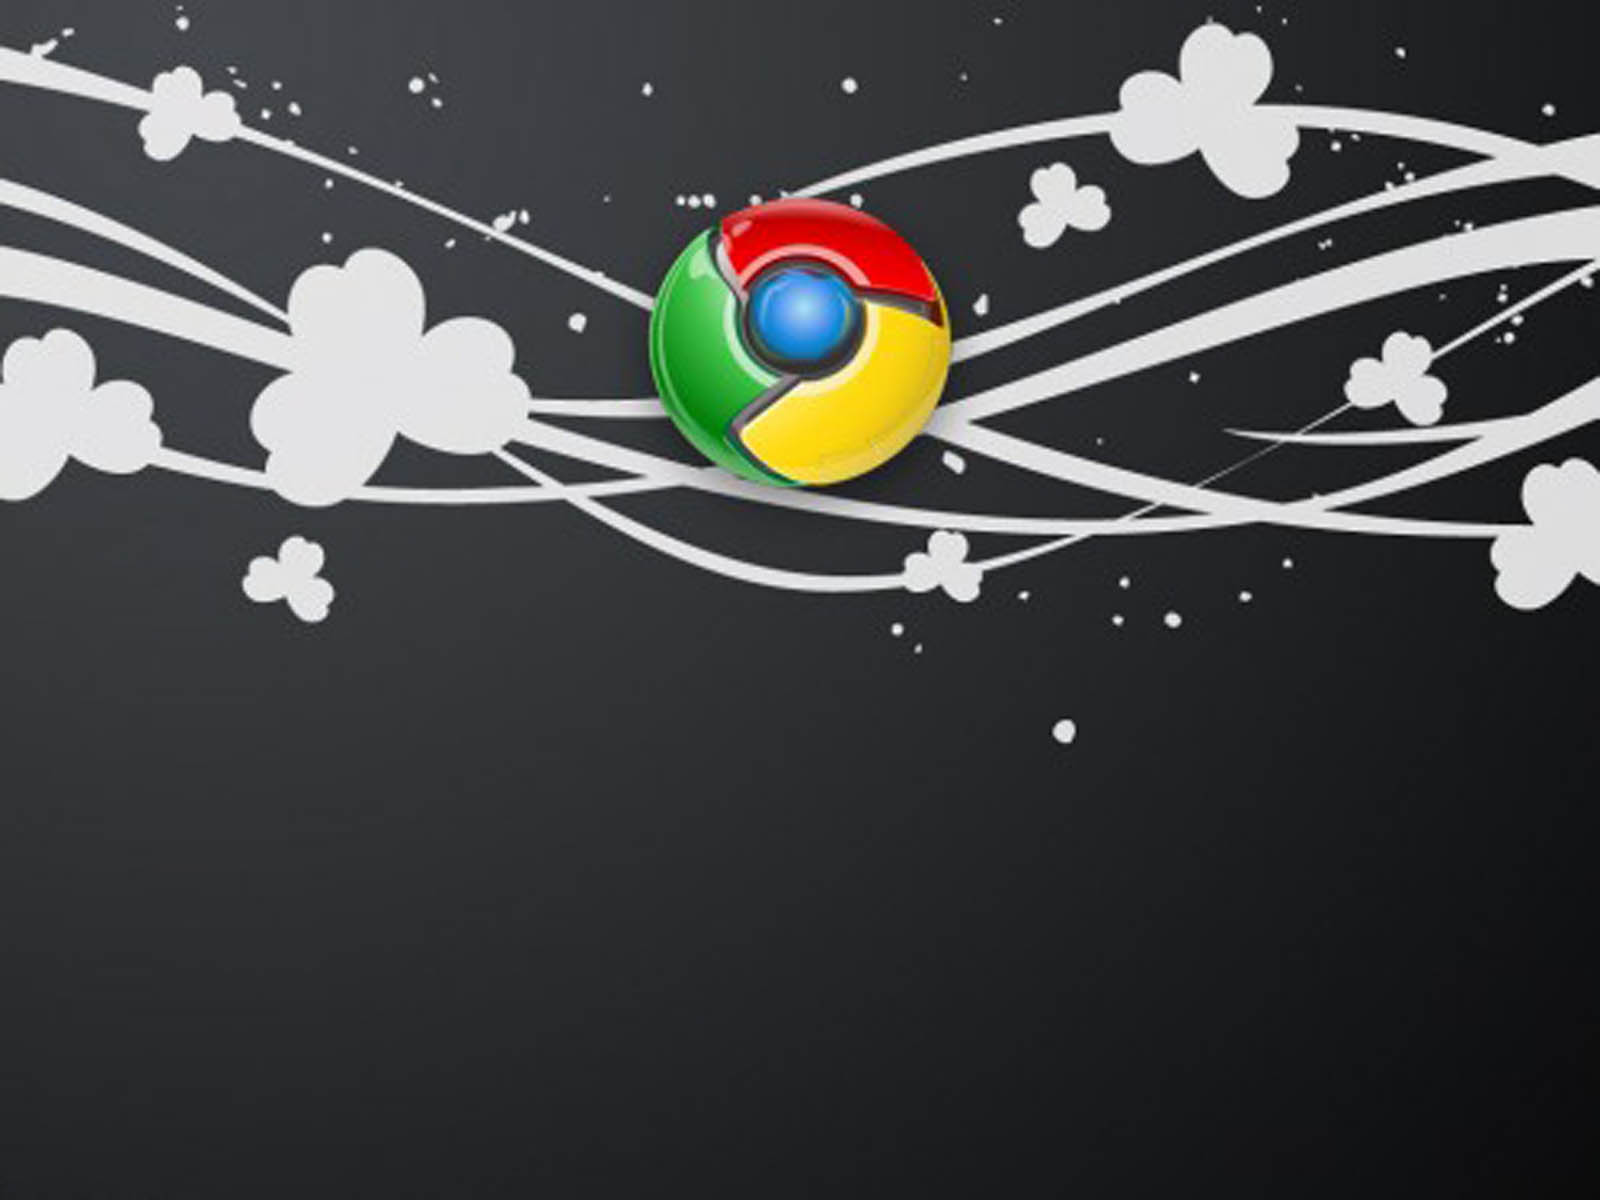 google chrome desktop